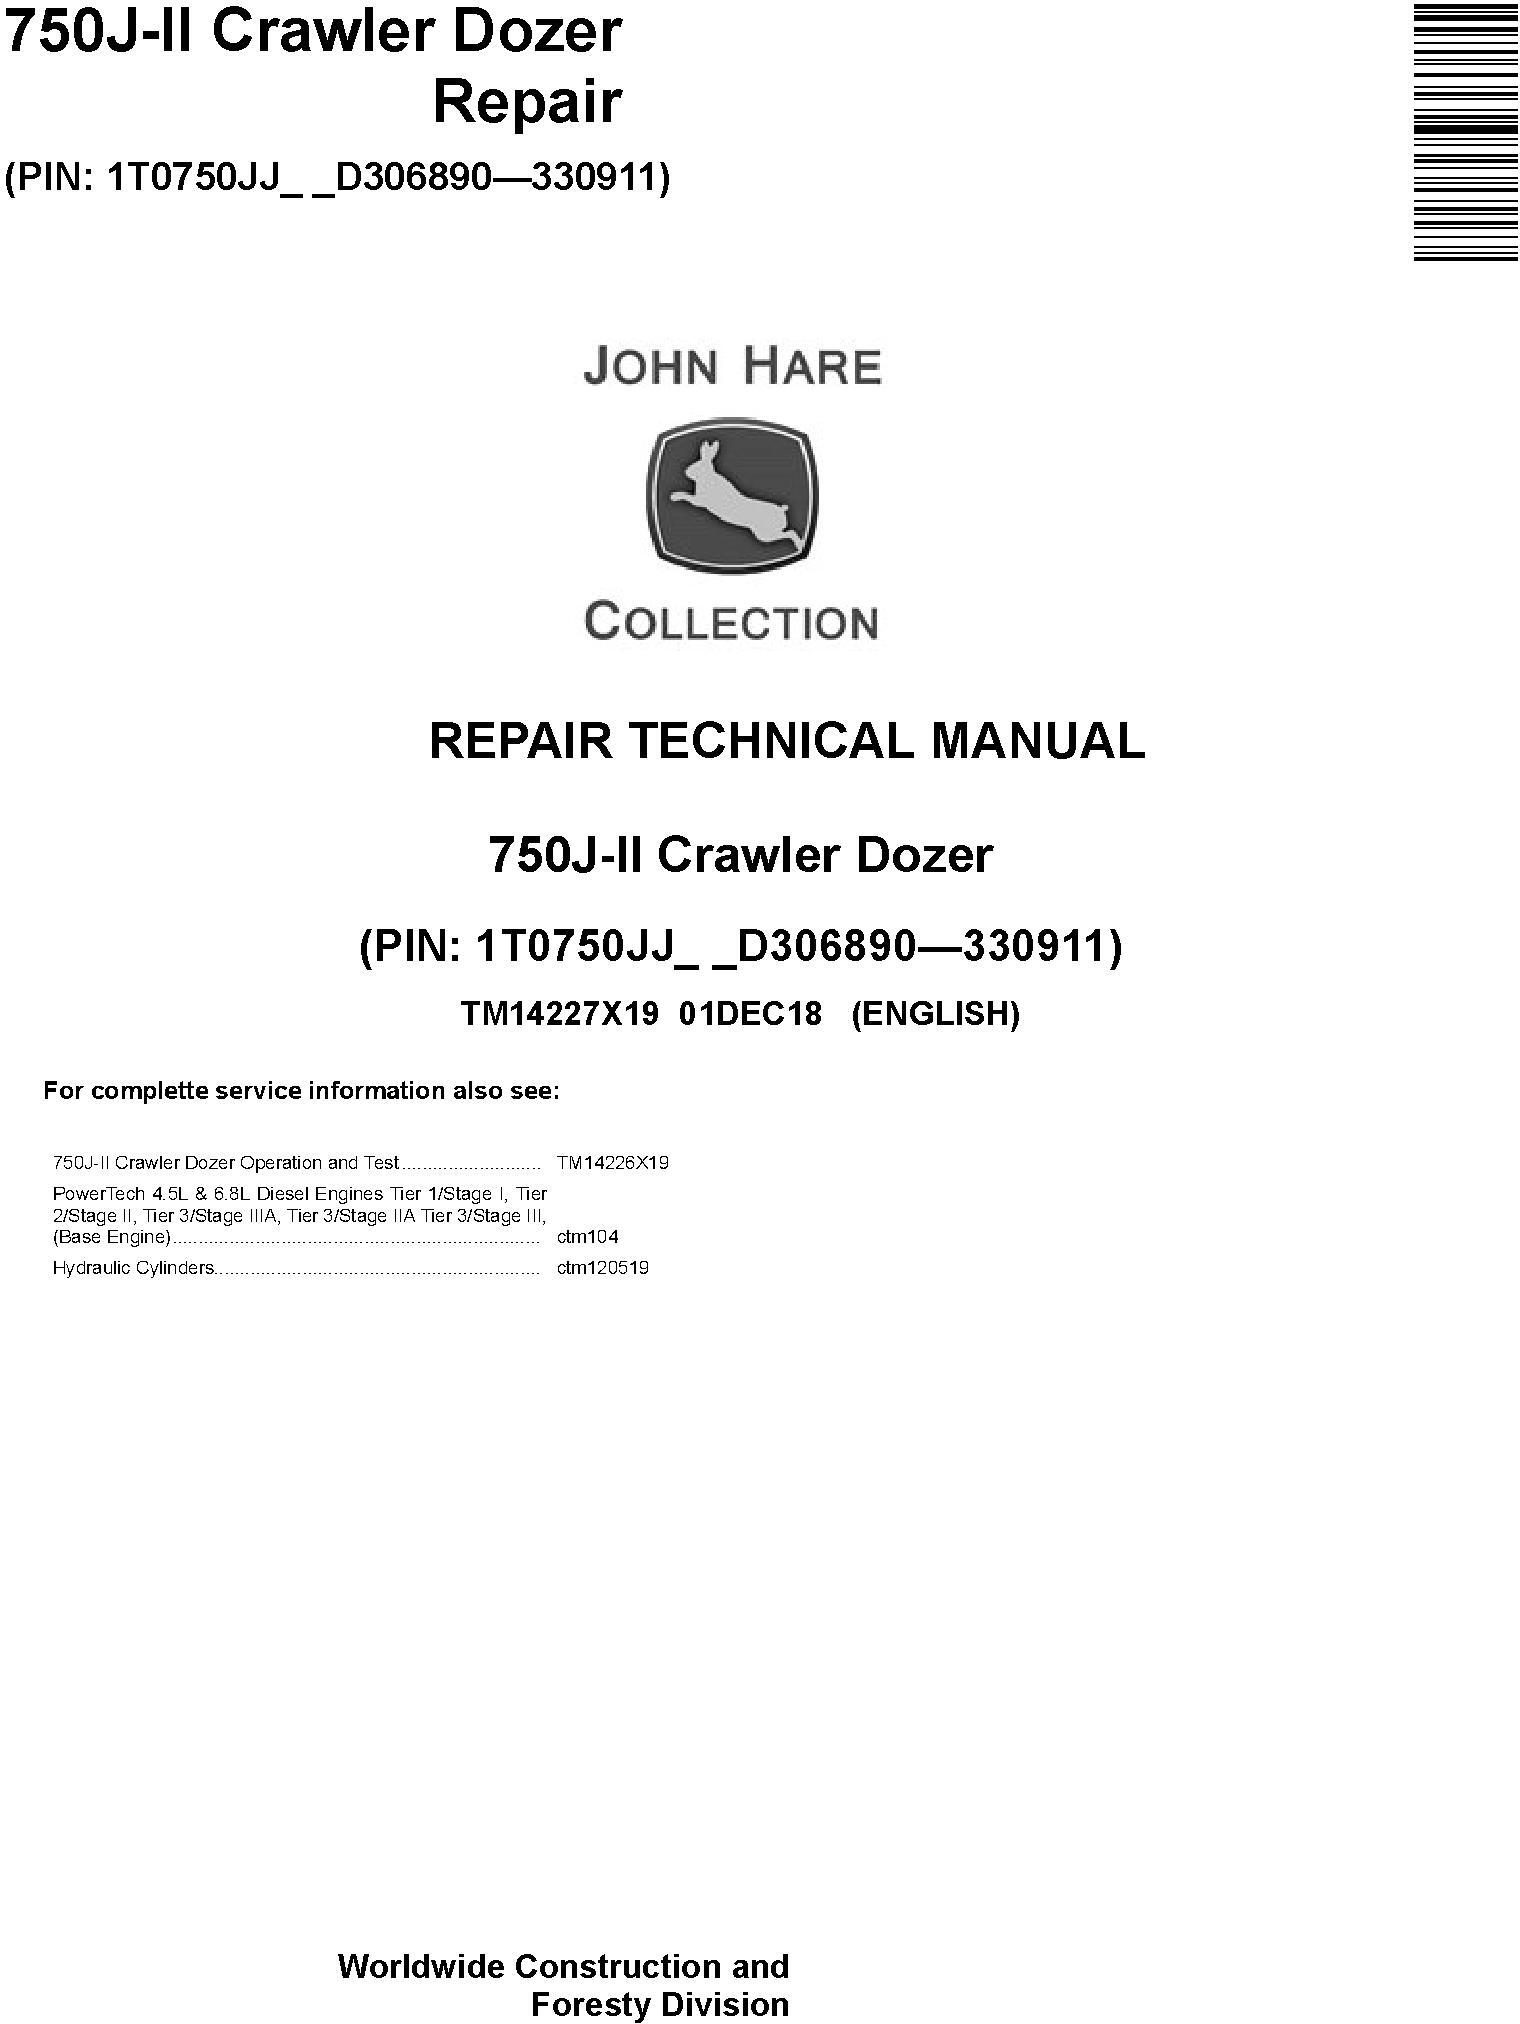 John Deere 750J-II (SN. D306890-330911) Crawler Dozer Repair Technical Service Manual (TM14227X19) - 19019